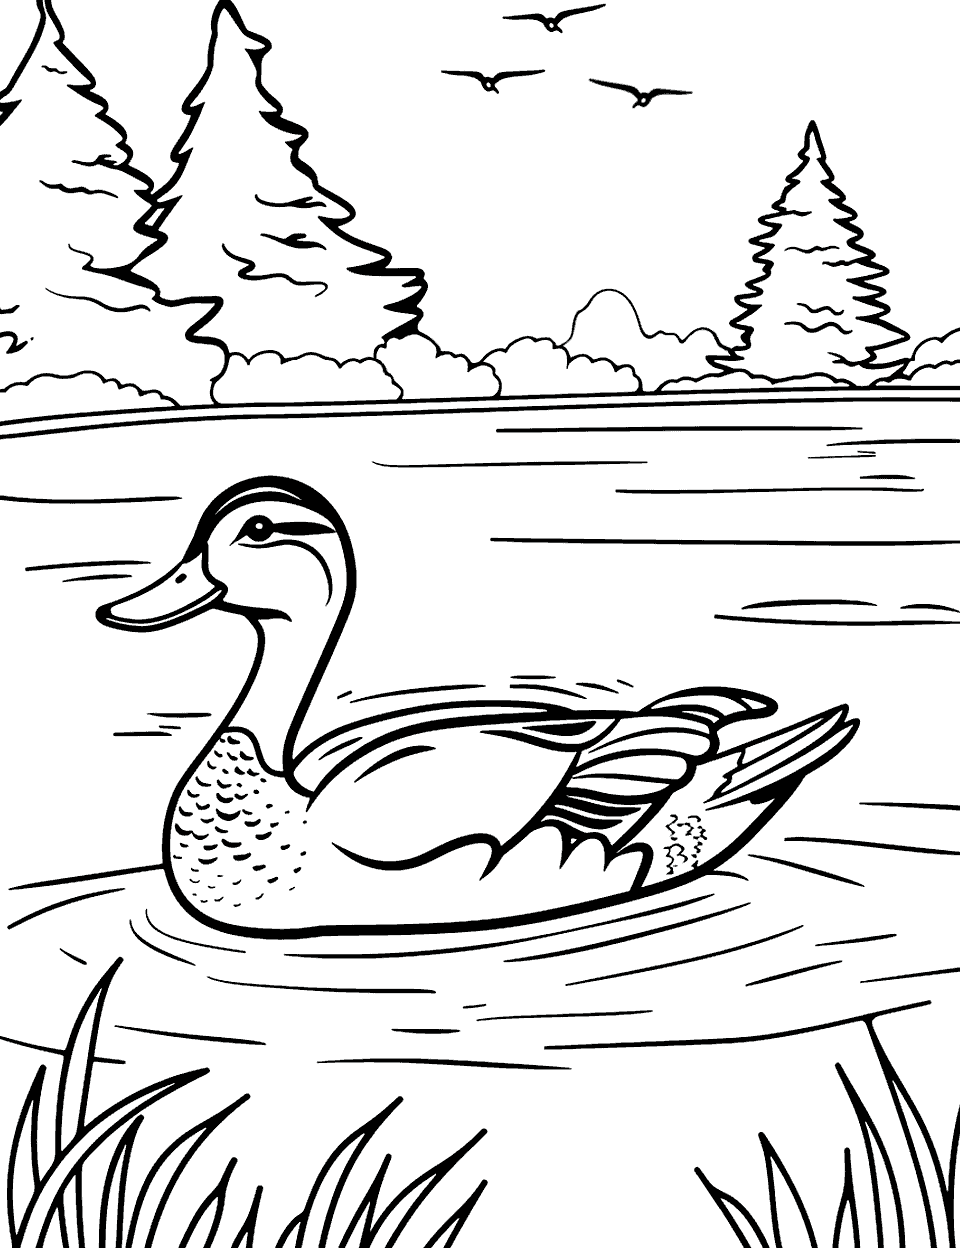 Mallard Duck on a Lake Coloring Page - A majestic mallard duck floating calmly on a serene lake.